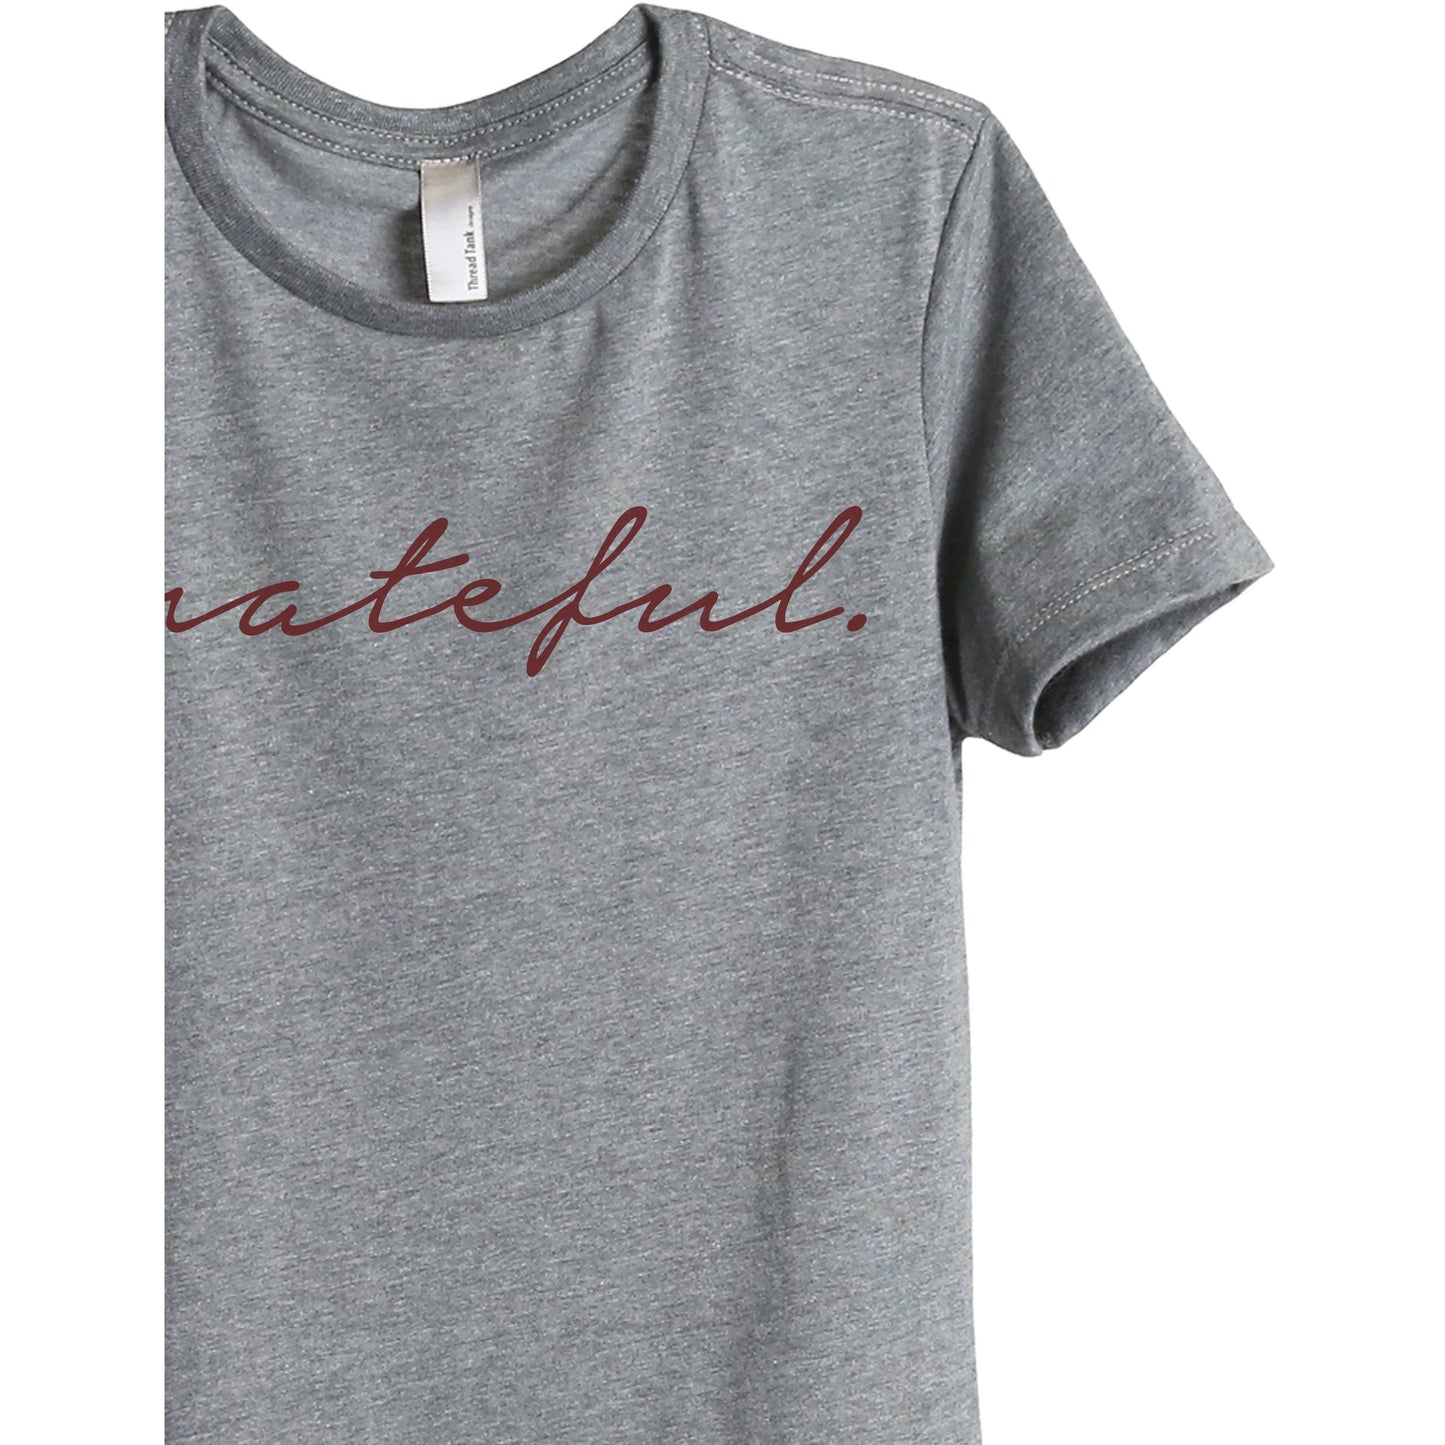 Grateful Women's Relaxed Crewneck T-Shirt Top Tee Heather Grey Zoom Details
